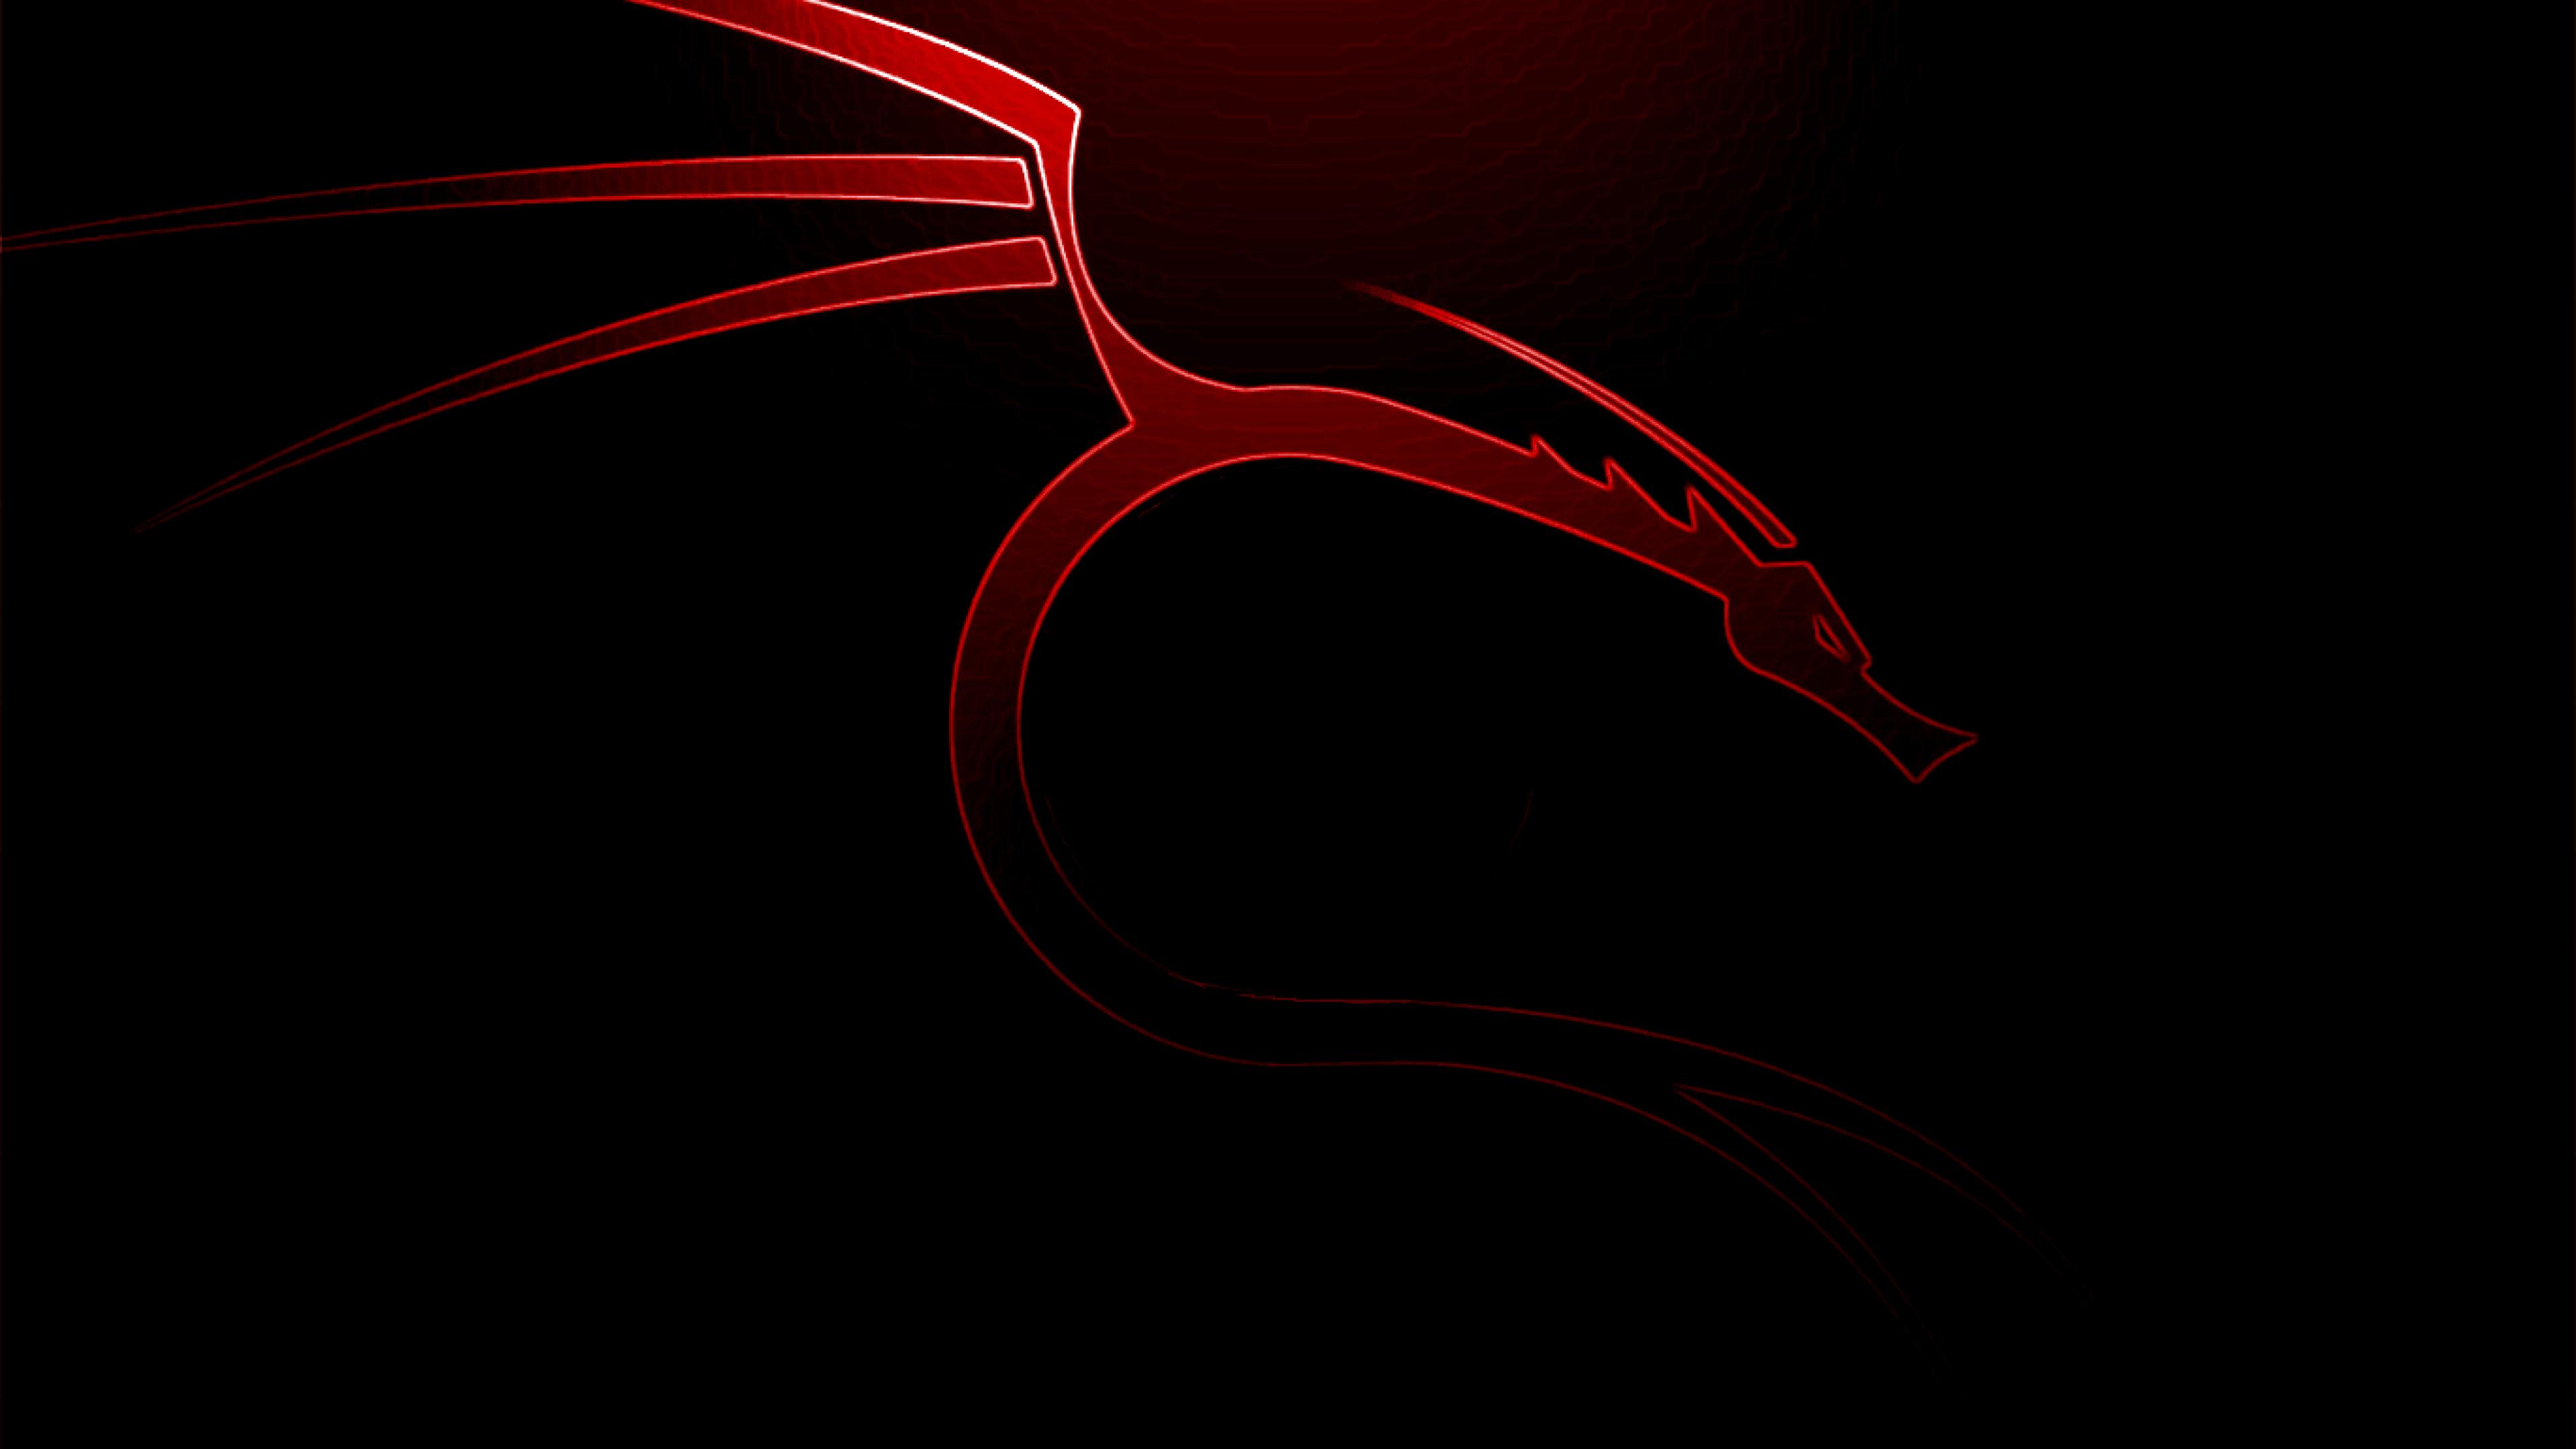 backtrack wallpaper,red,black,graphics,graphic design,logo